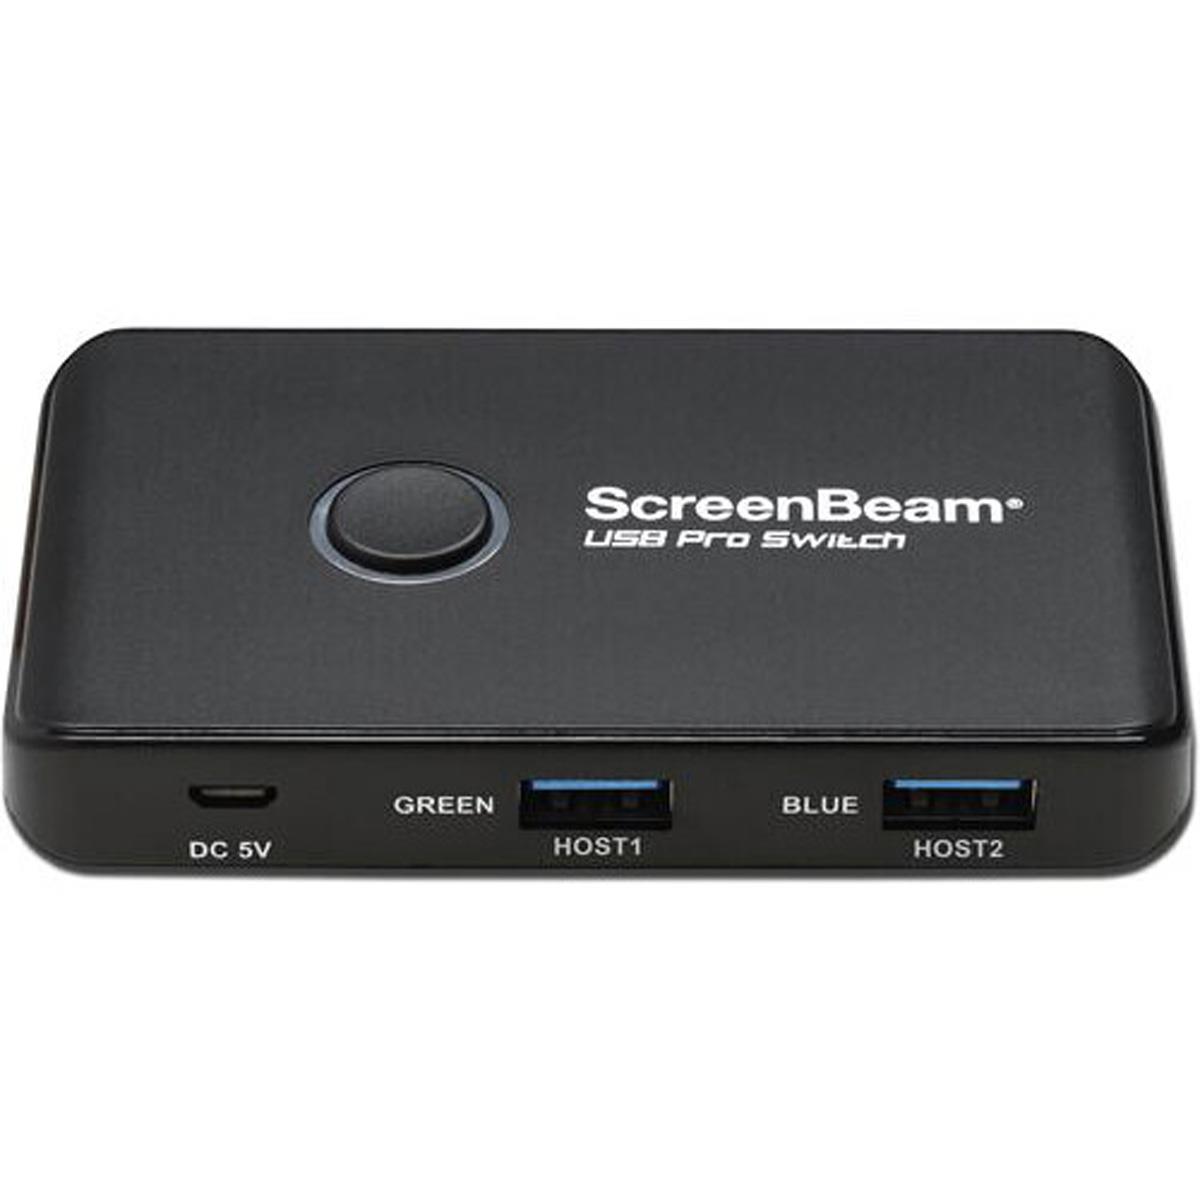 Image of ScreenBeam USB 3.0 Pro Switch